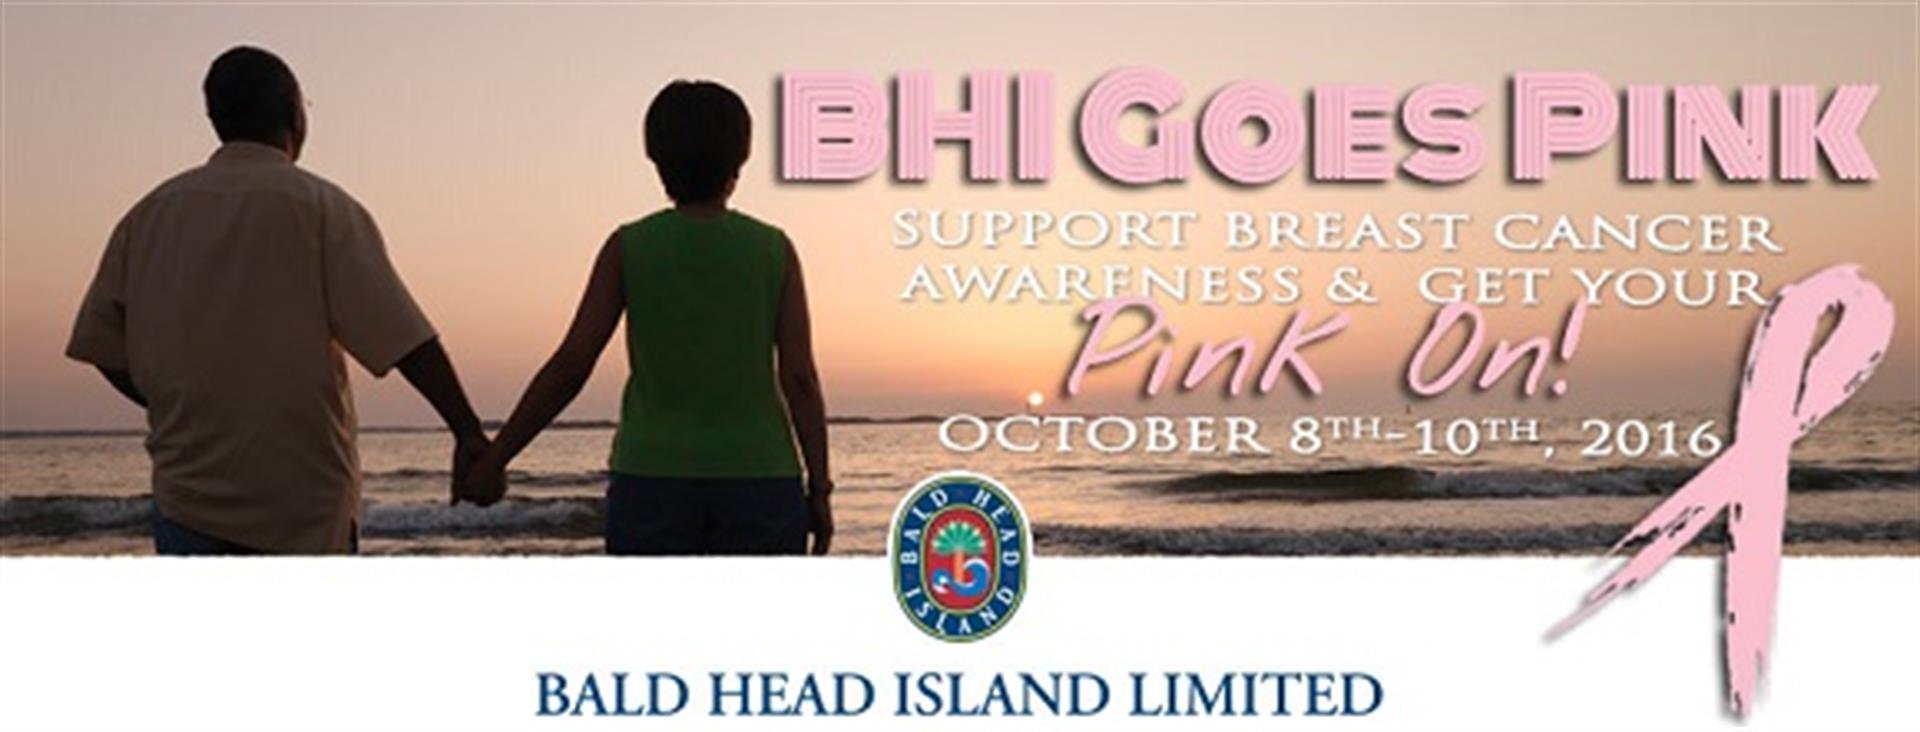 Bald Head Island Goes Pink